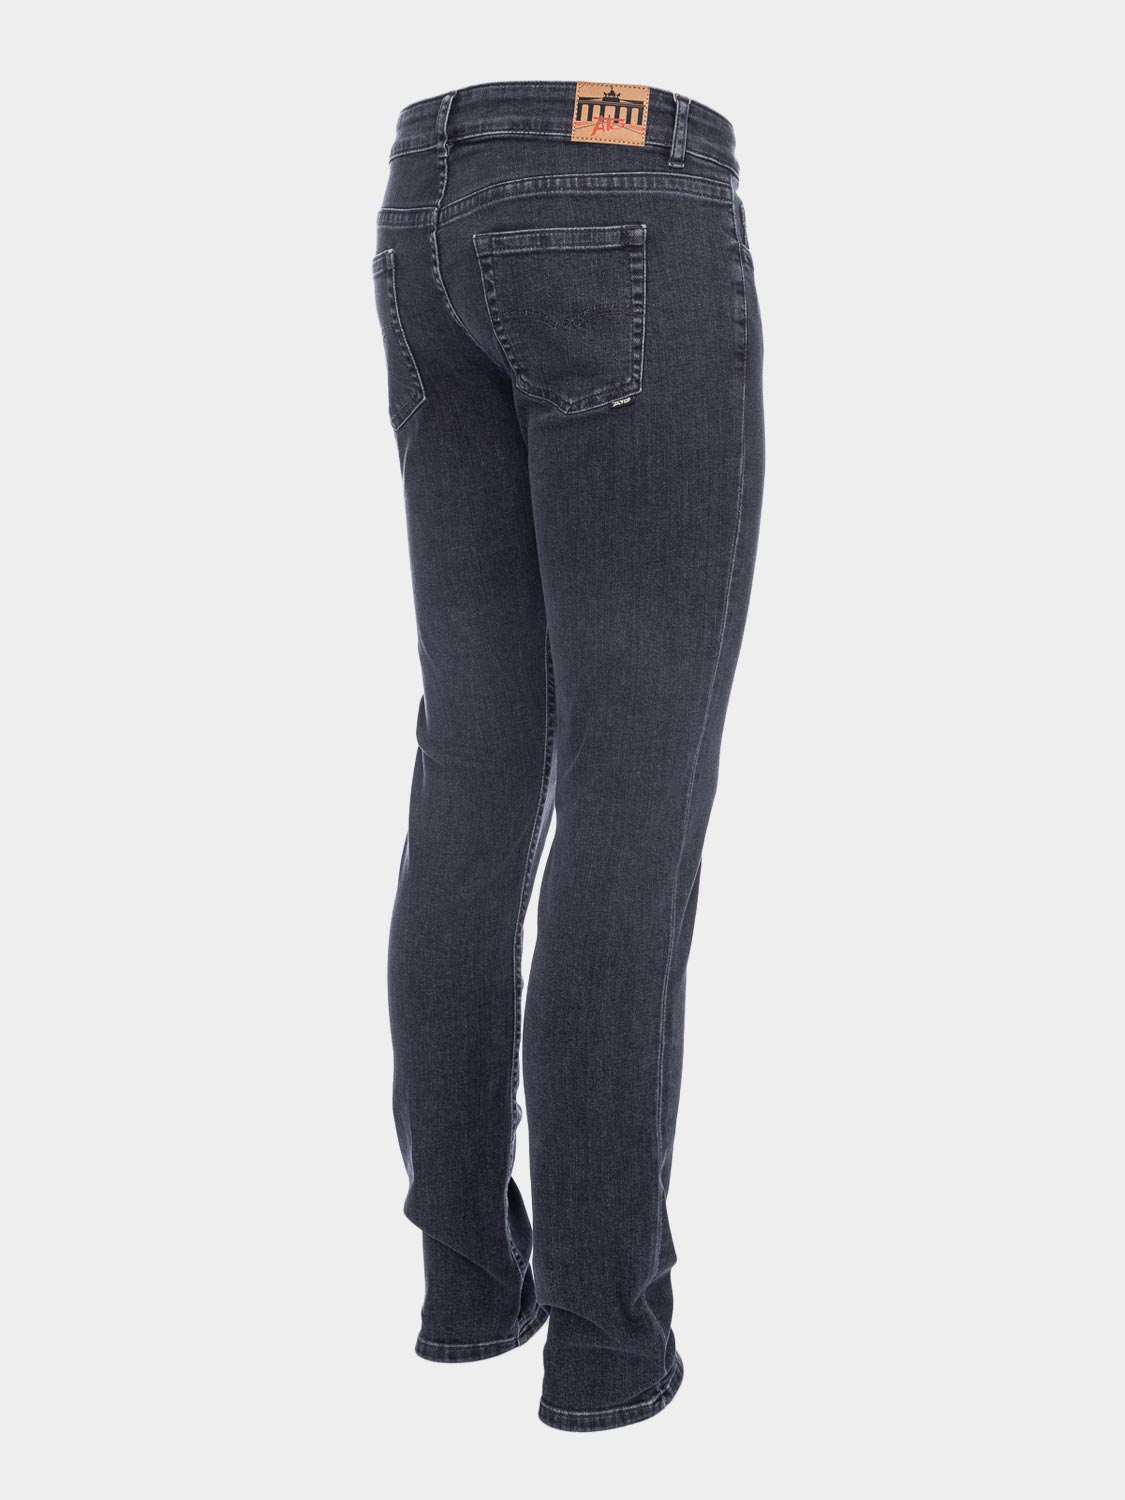 Jeans Slim Fred GOTS KR8855 BLK USD